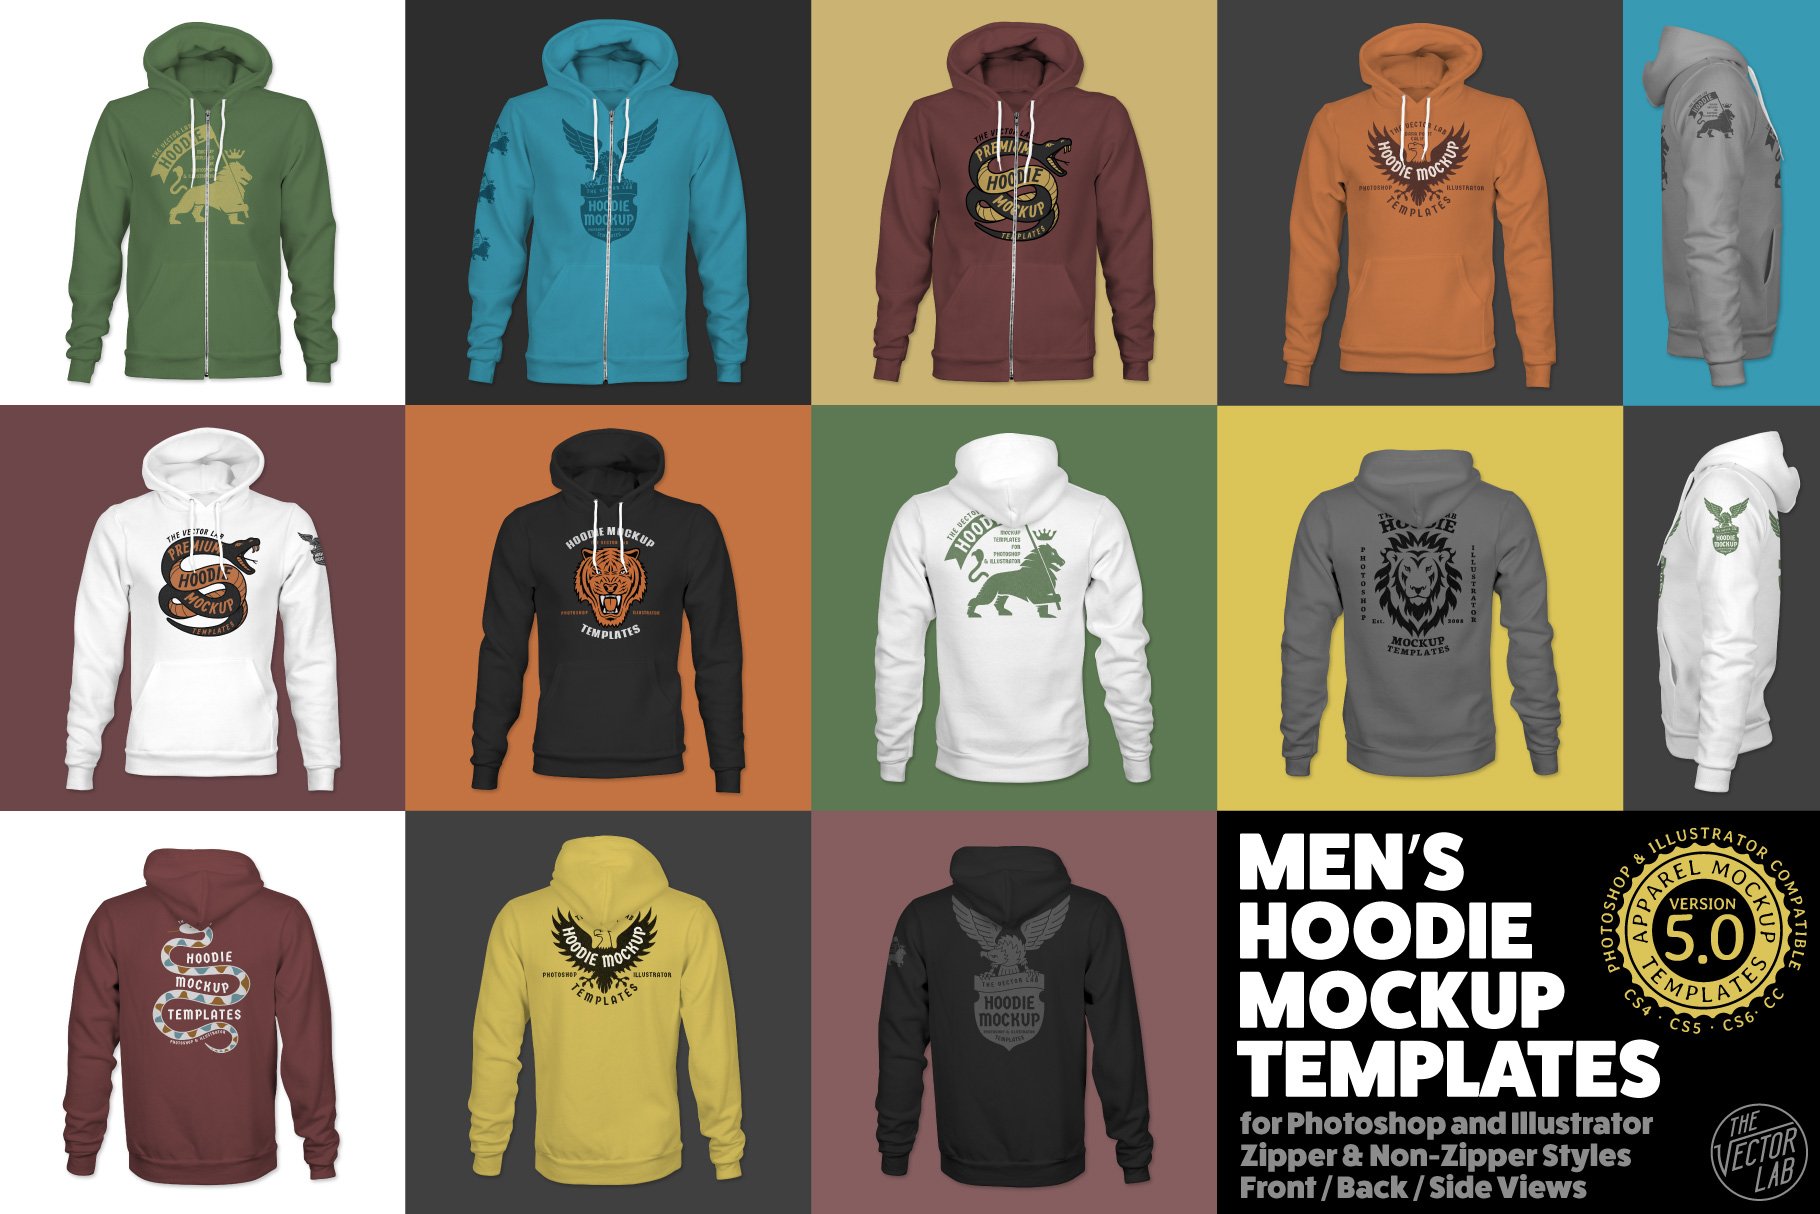 Men's Hoodie Mockup Templates cover image.